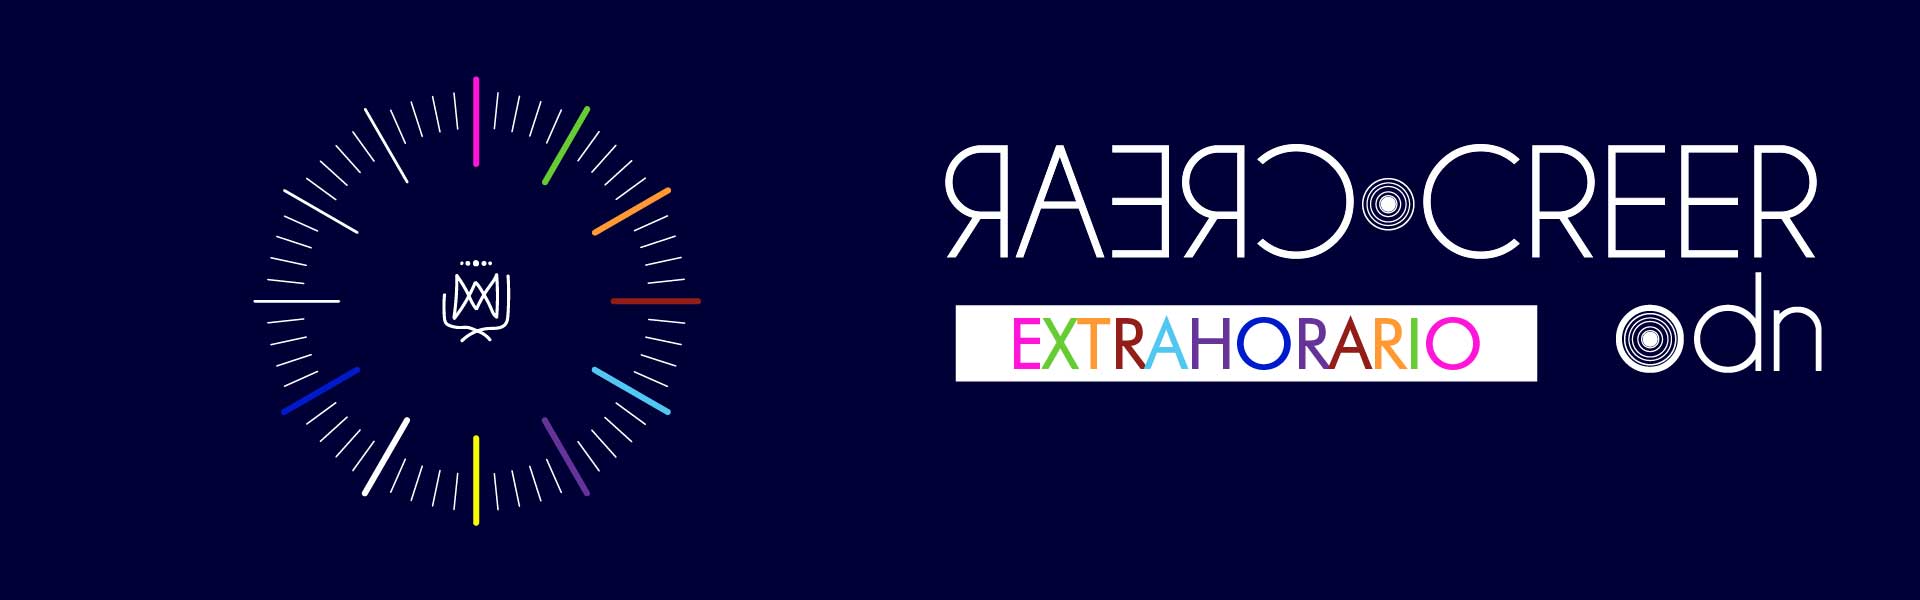 Extrahorario-Banner-